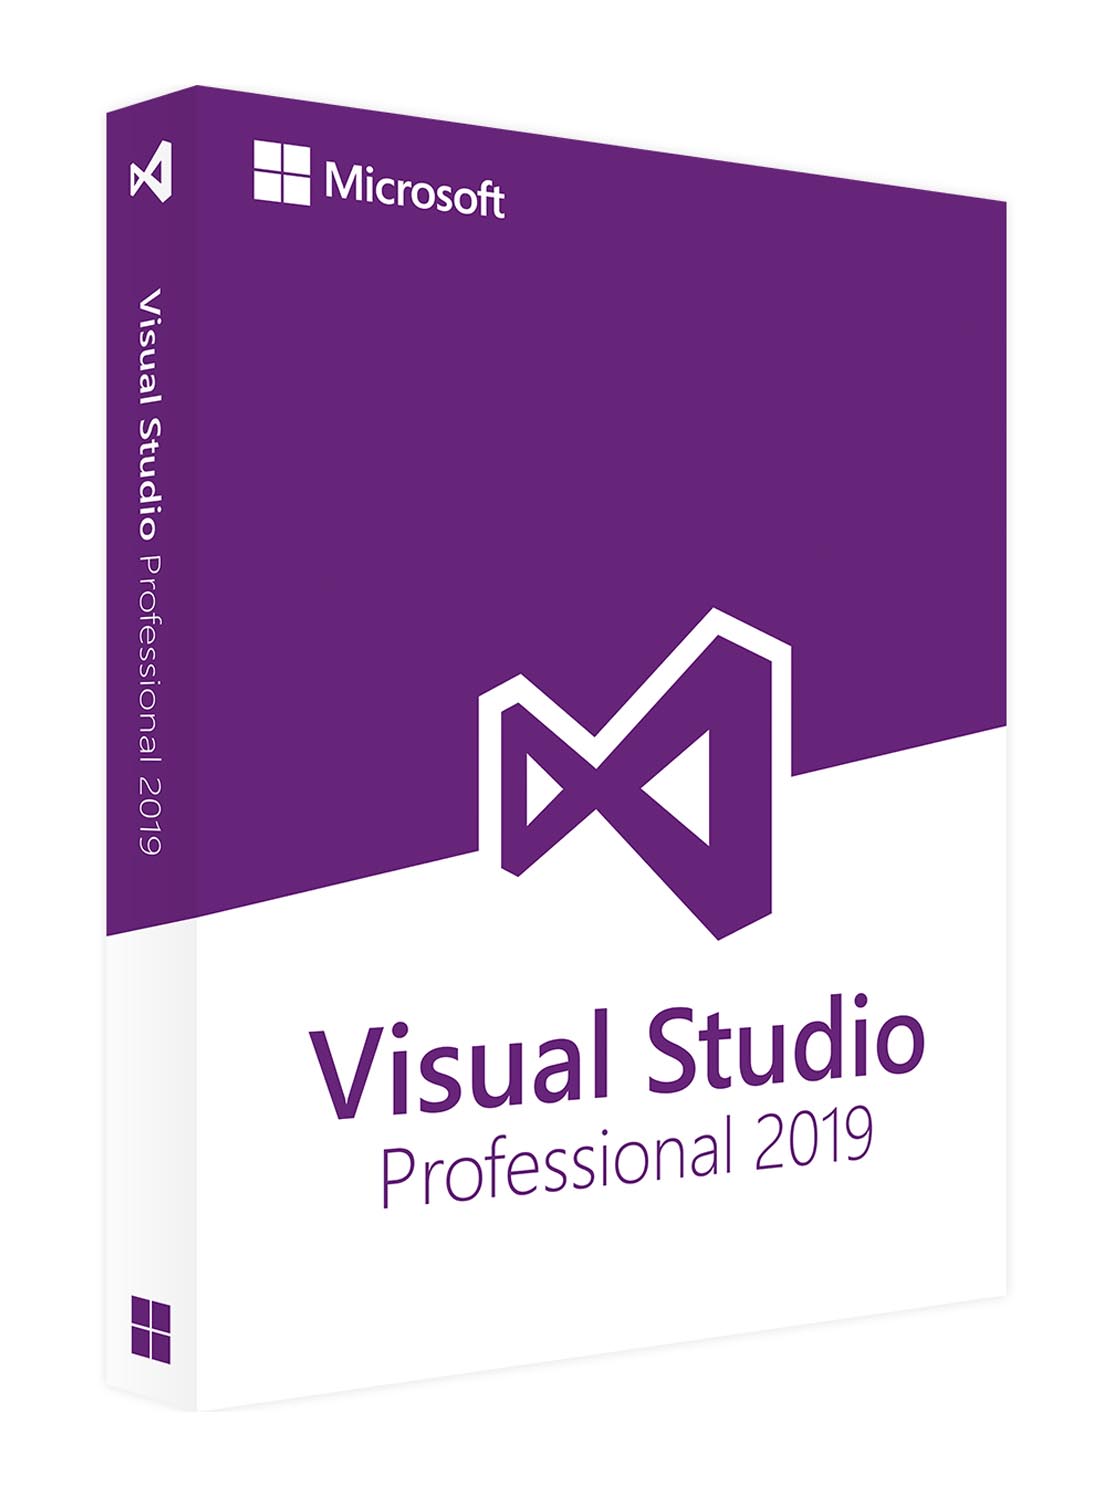 download ms visual studio 2019